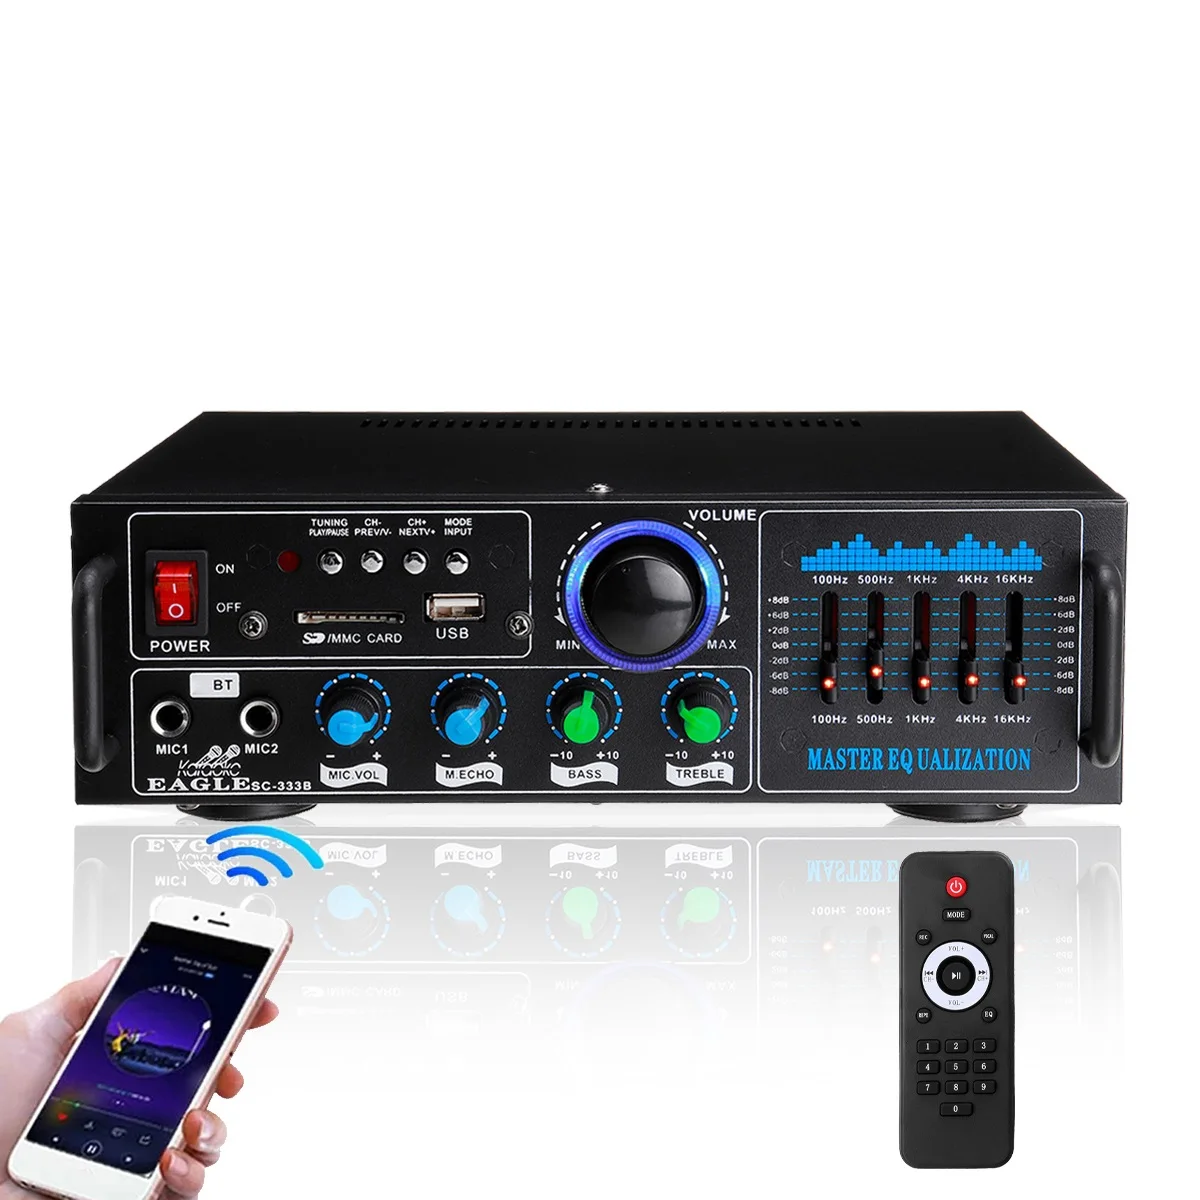 

2000W 2CH bluetooth Stereo Amplifier Surround Sound Mixer 2mic HiFi Amplifiers USB AMP FM AUX Home Cinema Karaoke Remote Control